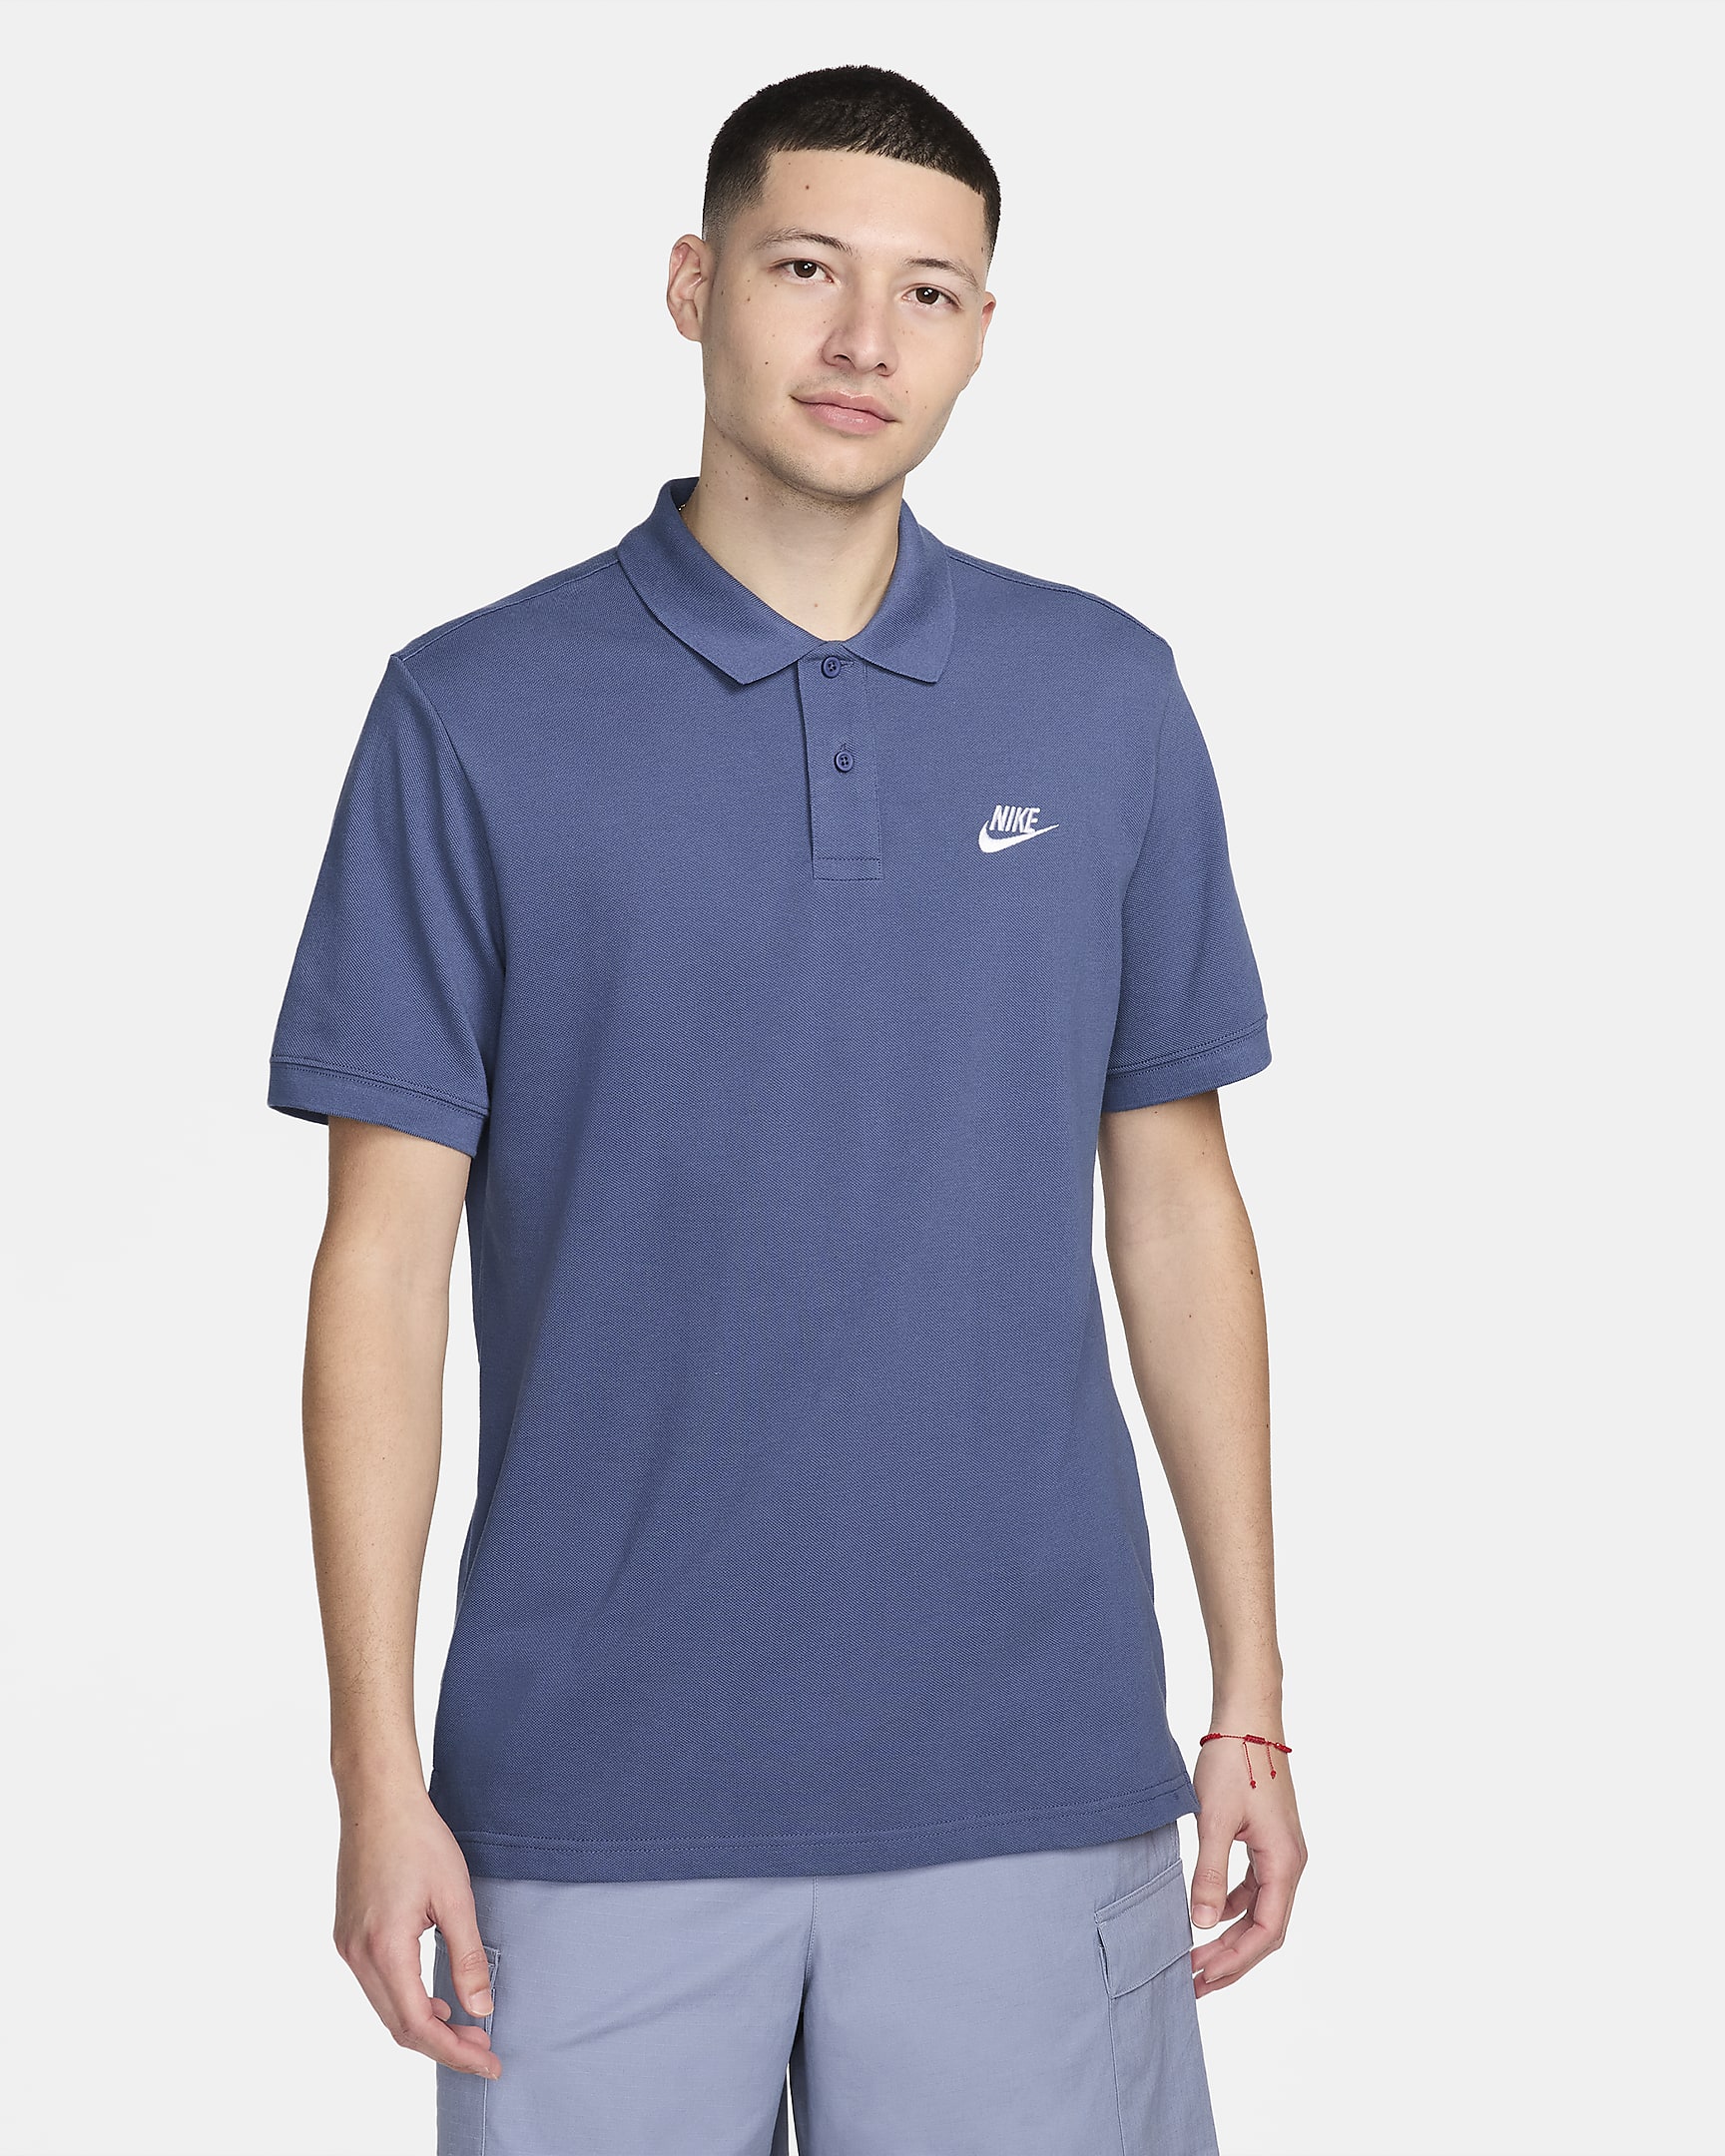 Nike Sportswear Men's Polo - Diffused Blue/White